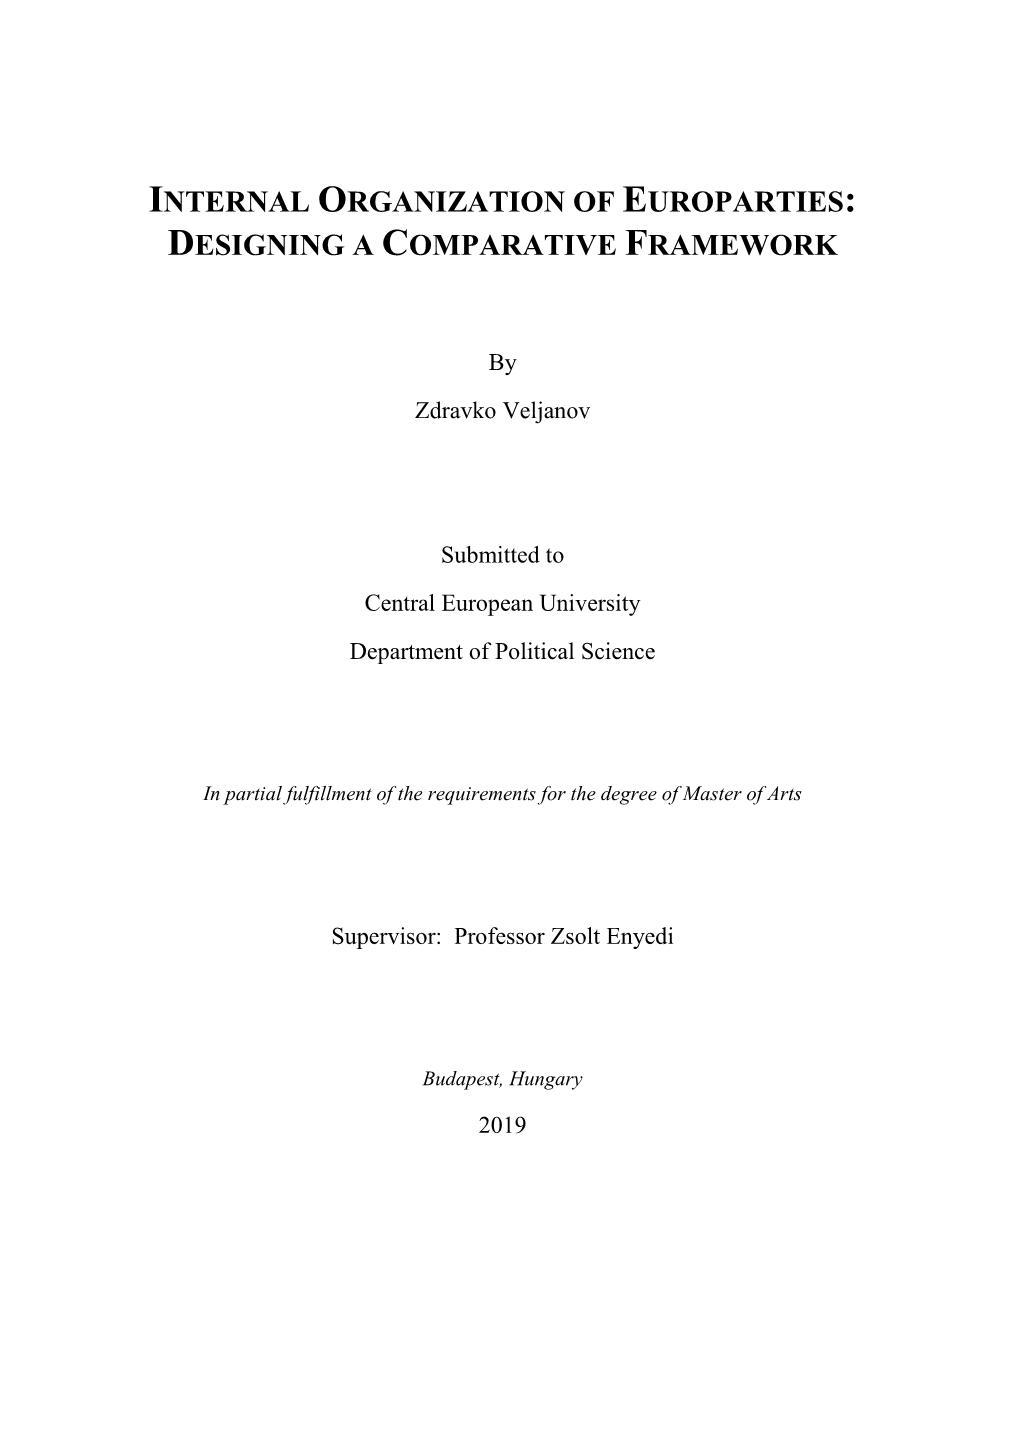 Internal Organization of Europarties: Designing a Comparative Framework